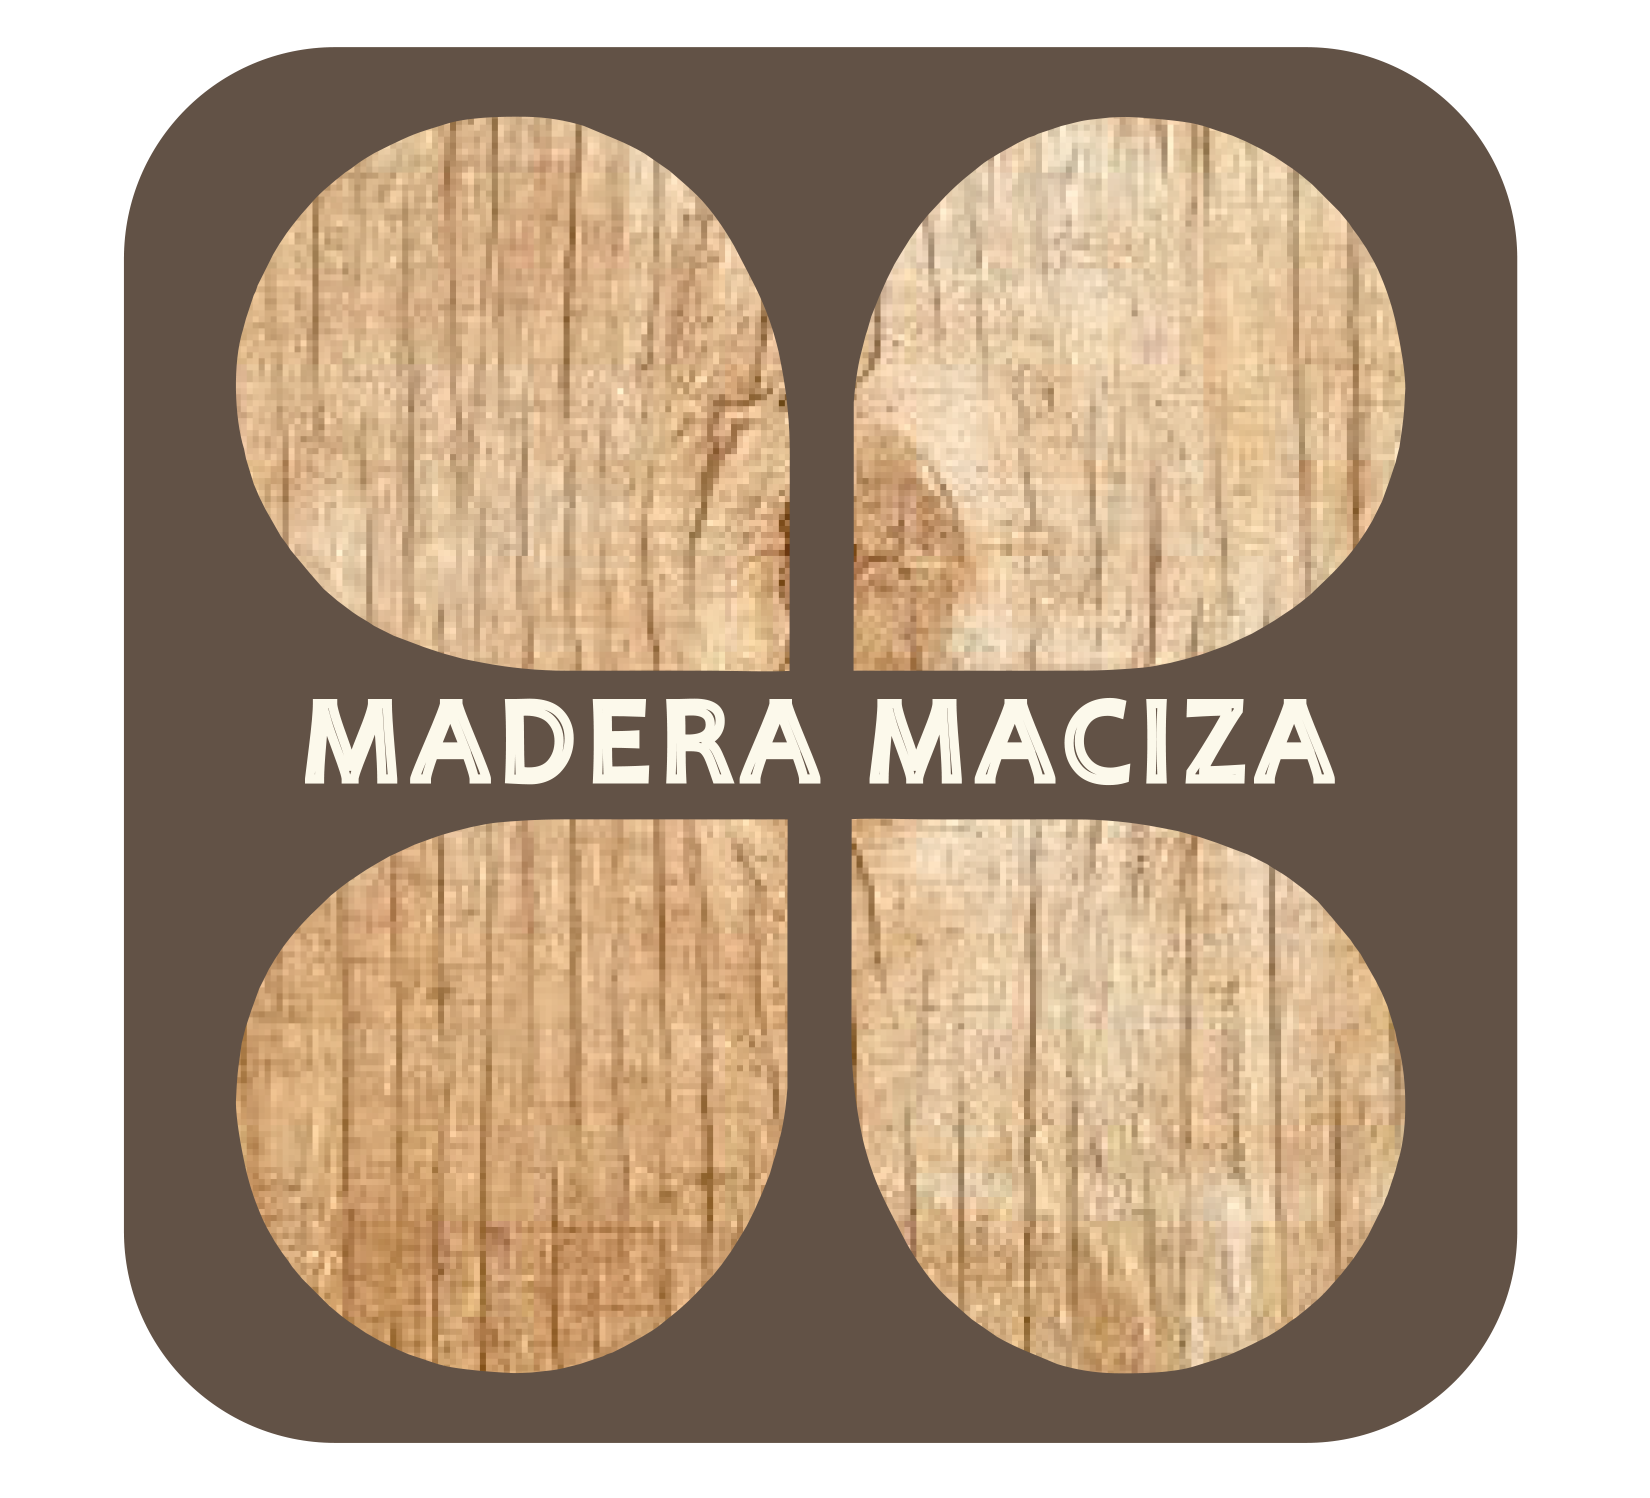 Madera maciza